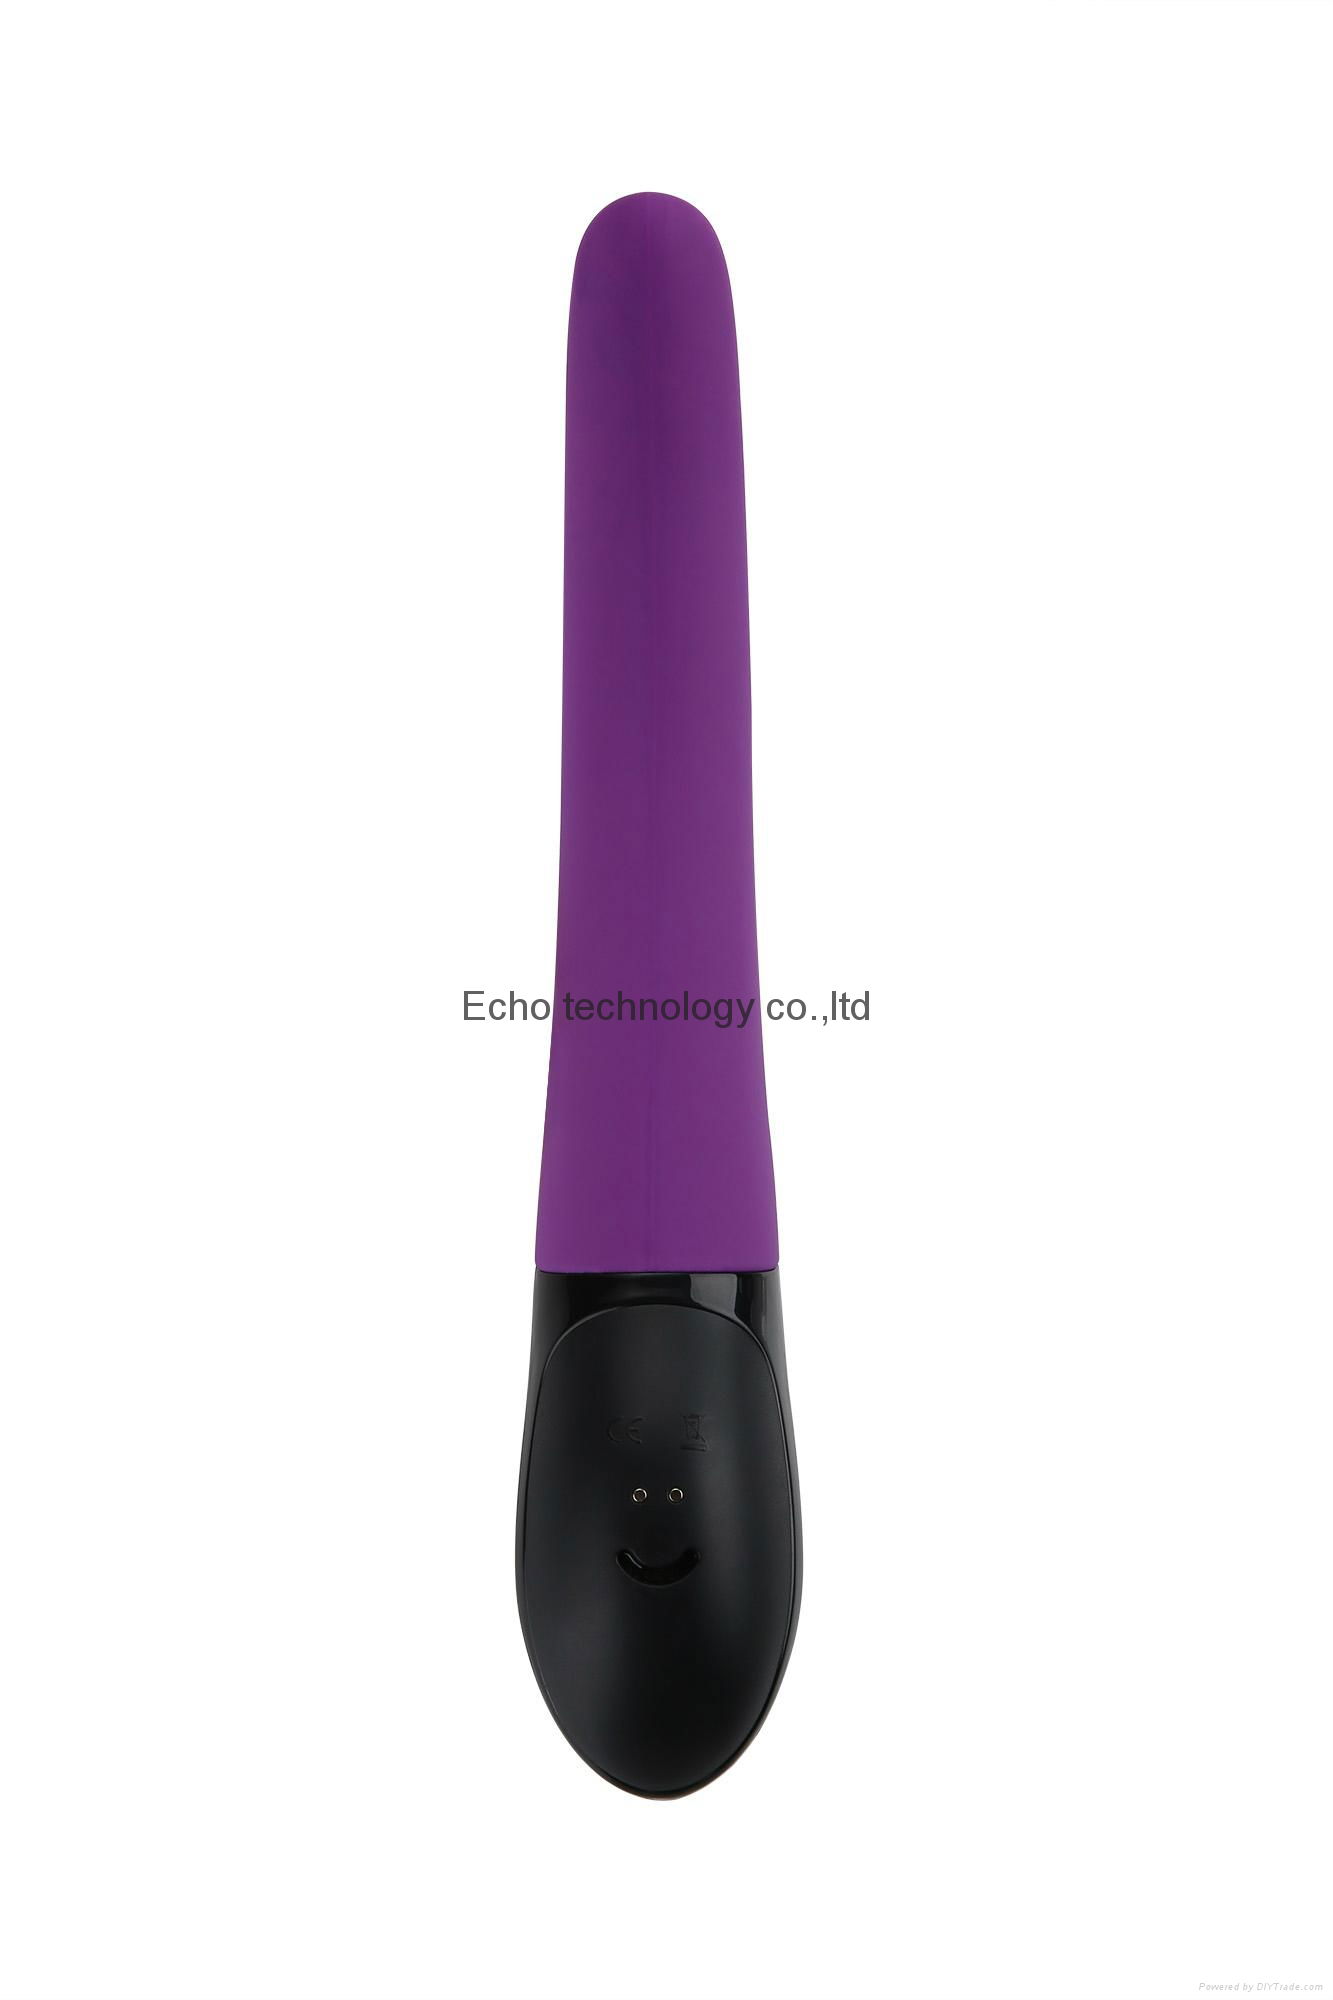 9 Vibration modes sex toy flexible tongue vibrator 3